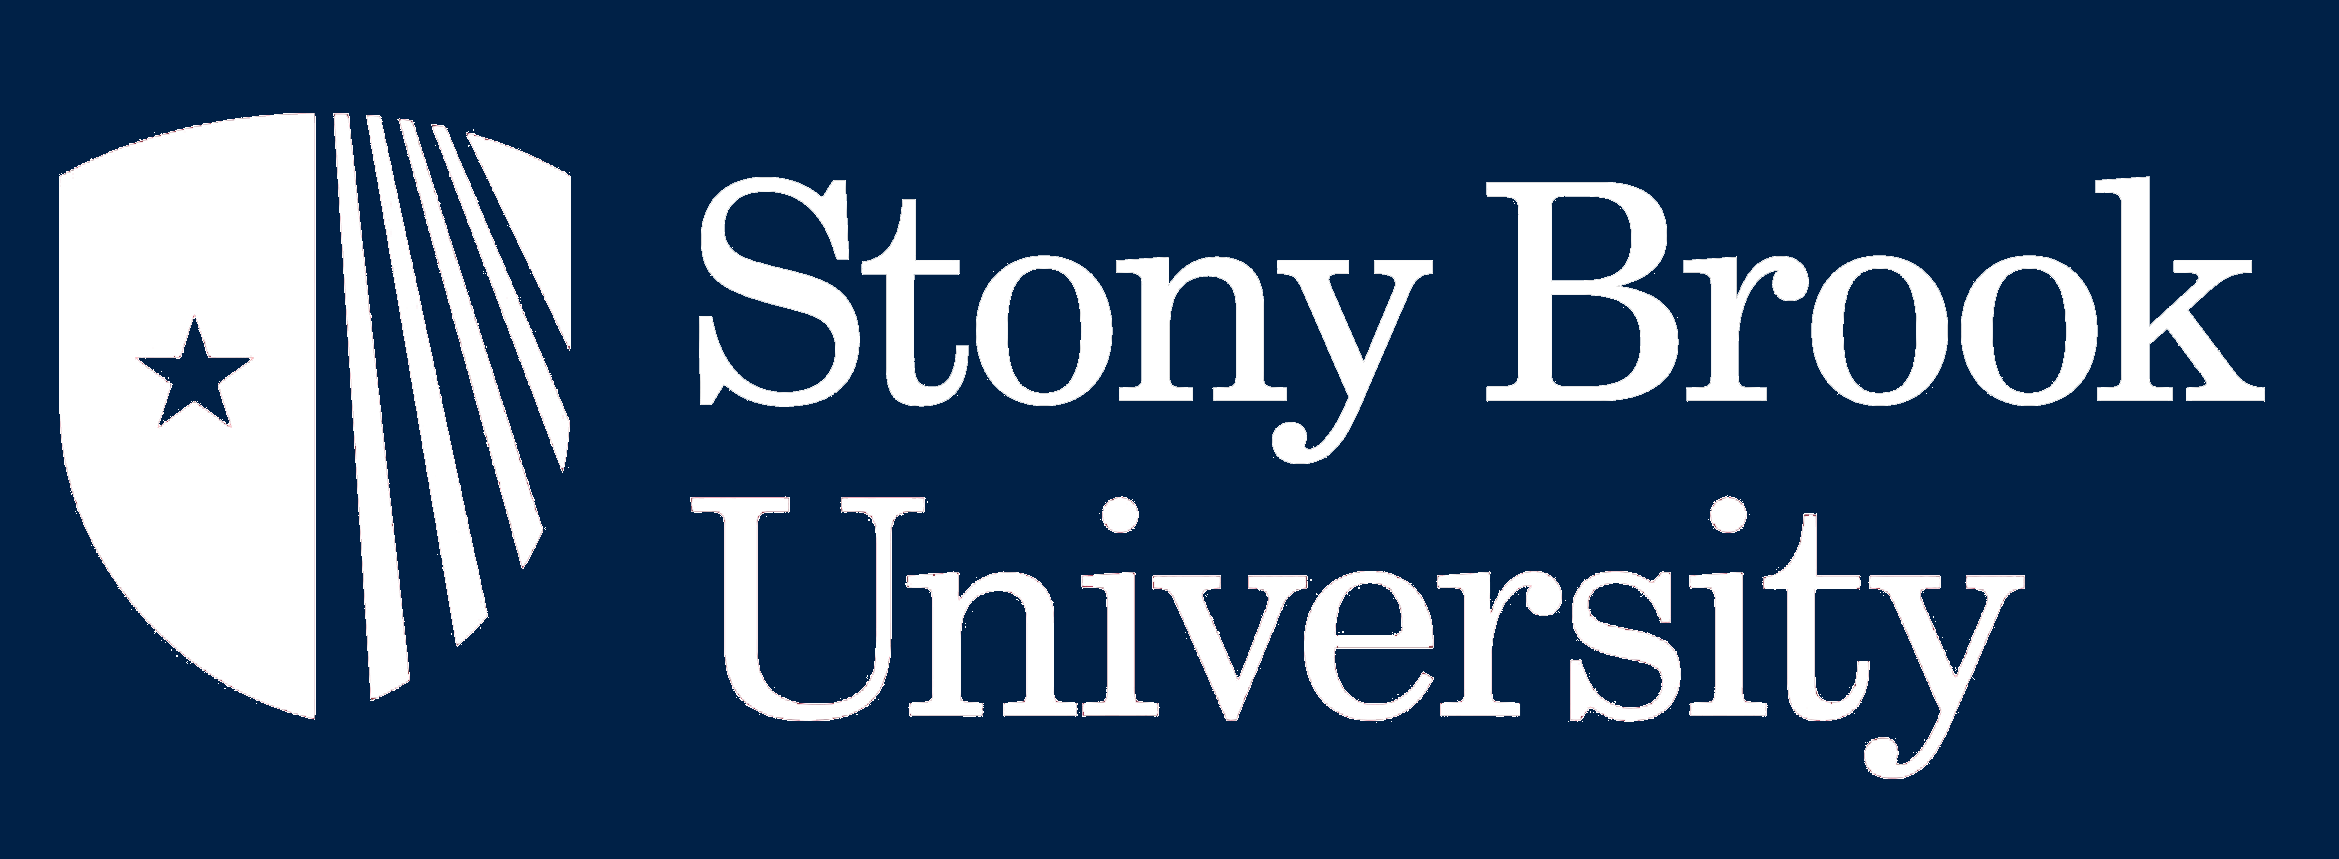 Stony Brook University home page